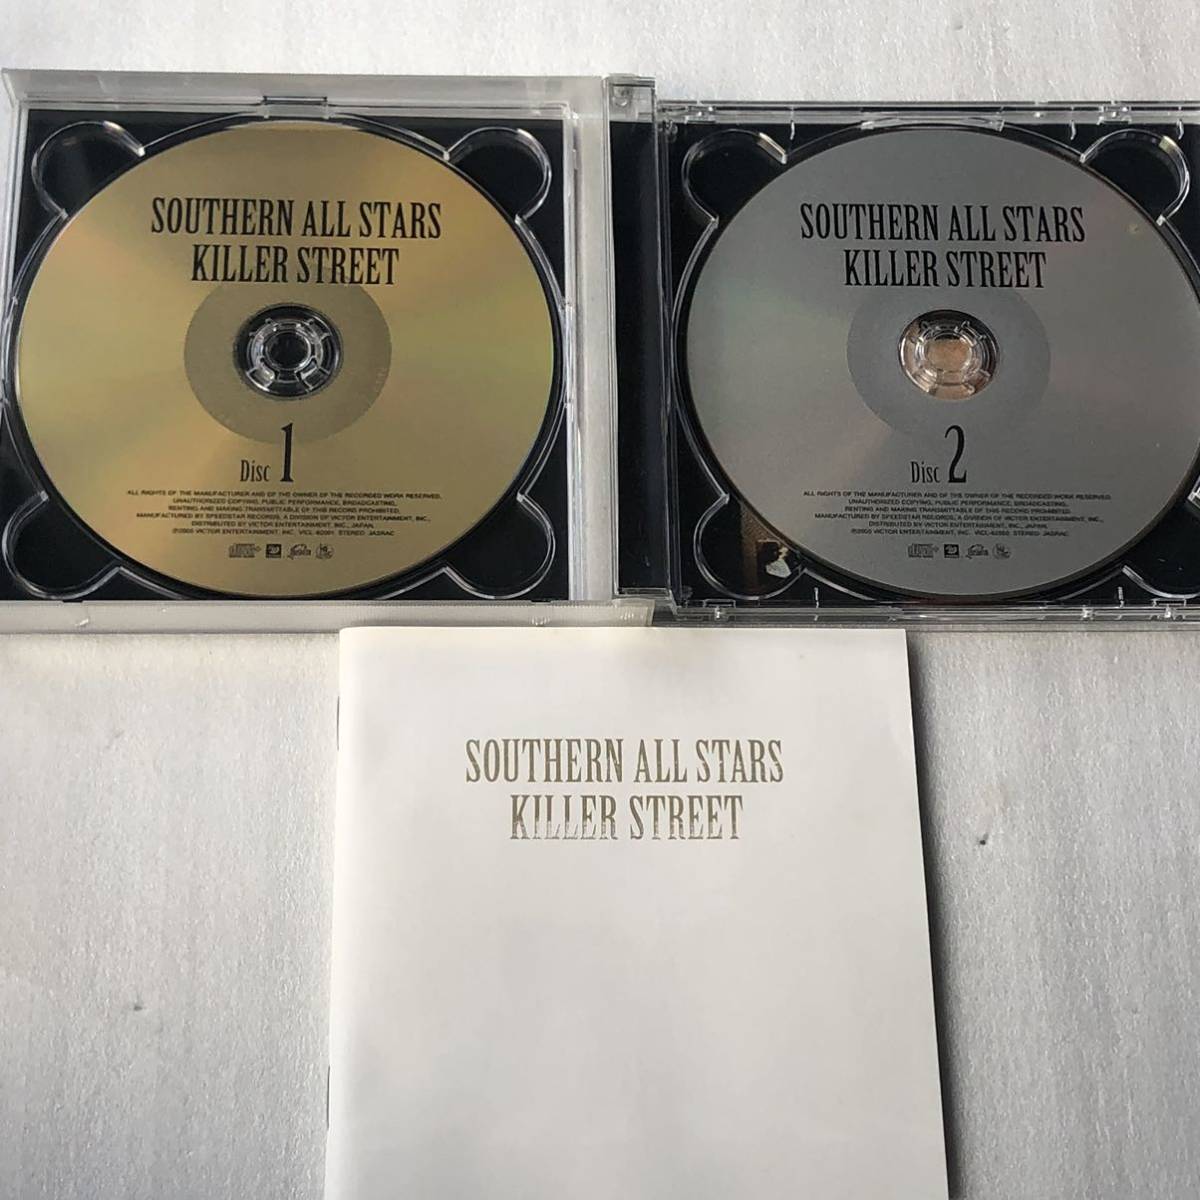  б/у CD Southern All Stars / killer Street (2CD) (2005 год )